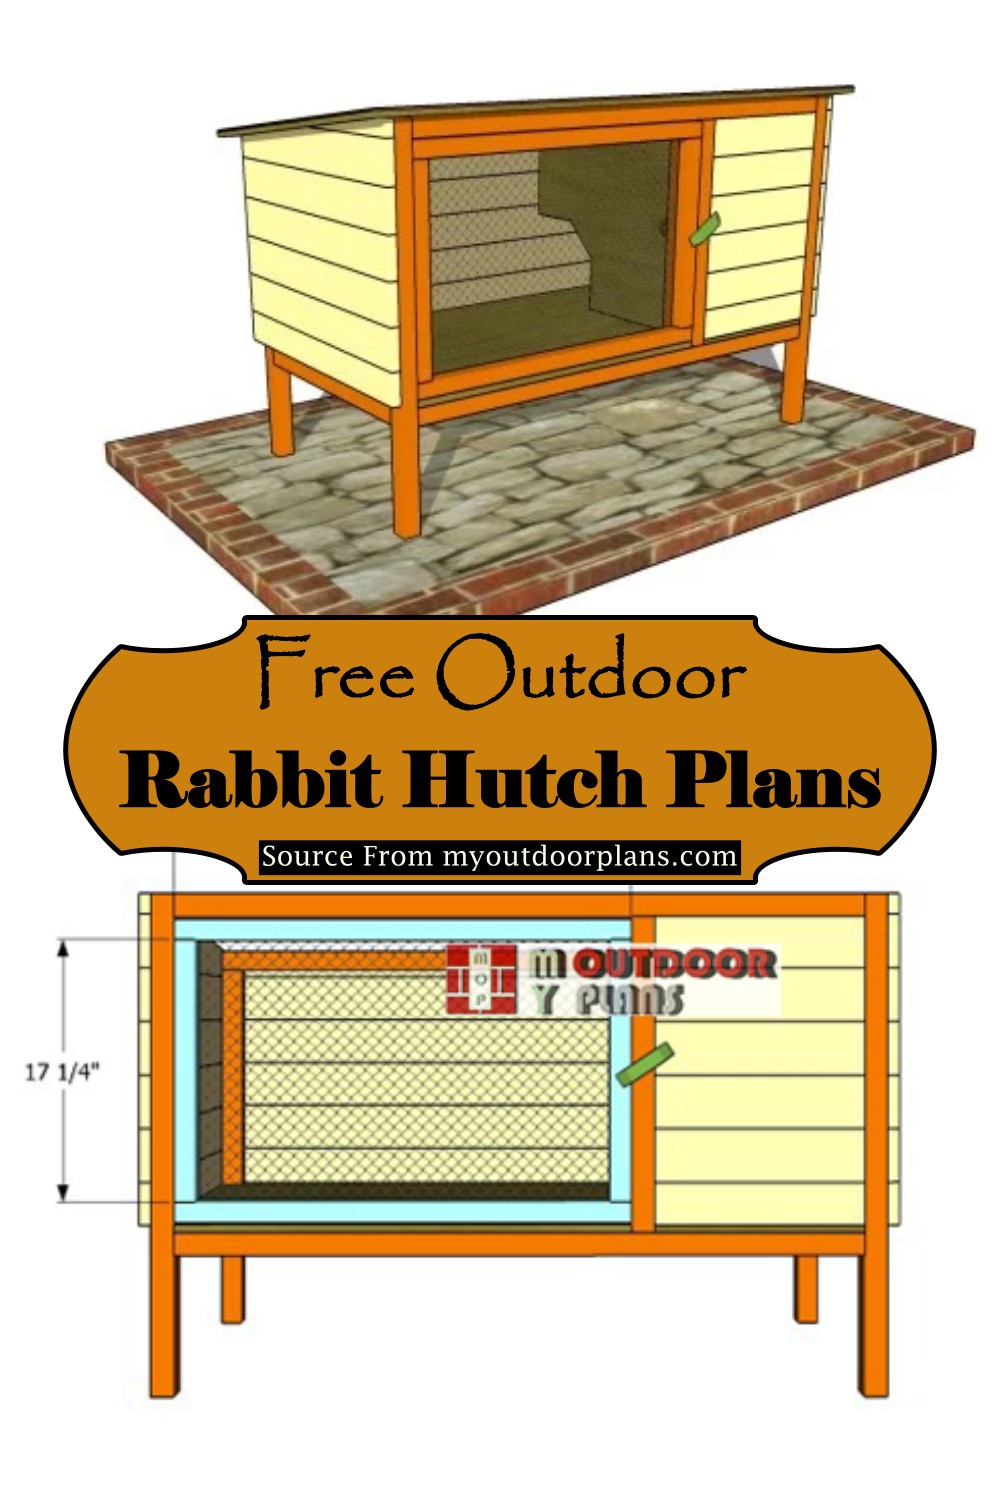 Free Outdoor Rabbit Hutch Plans